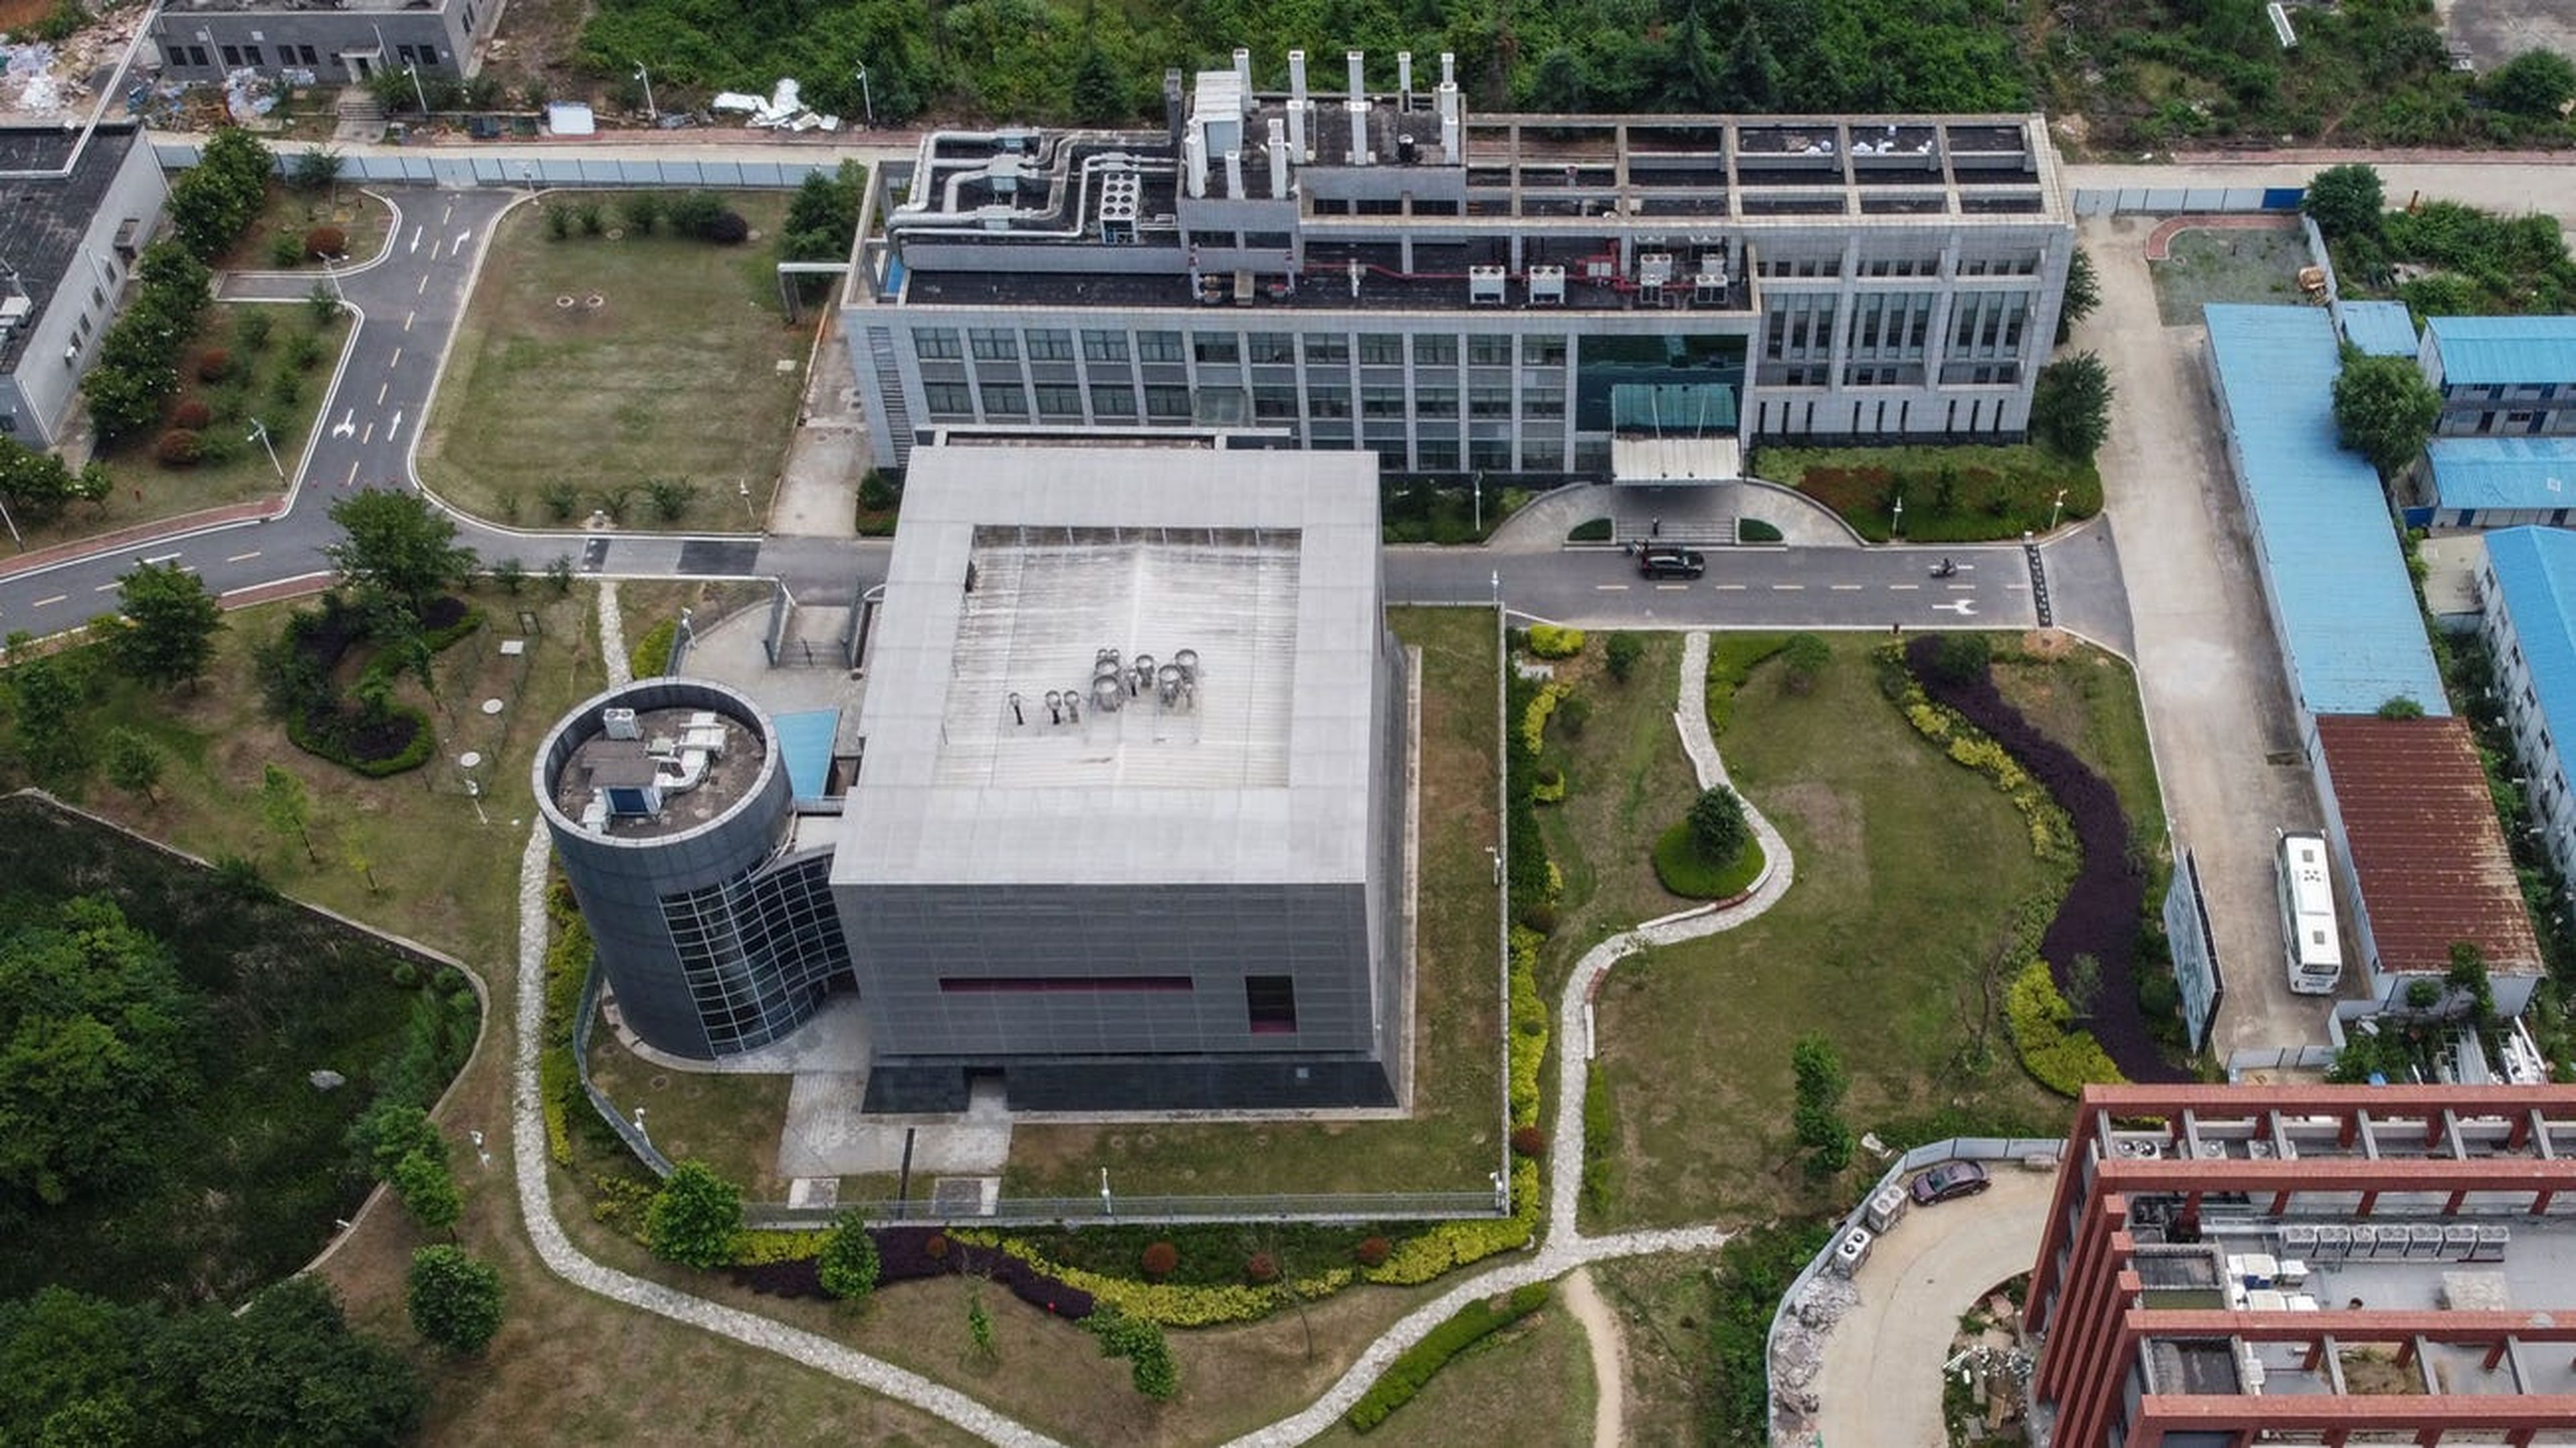 Instituo de virología de Wuhan